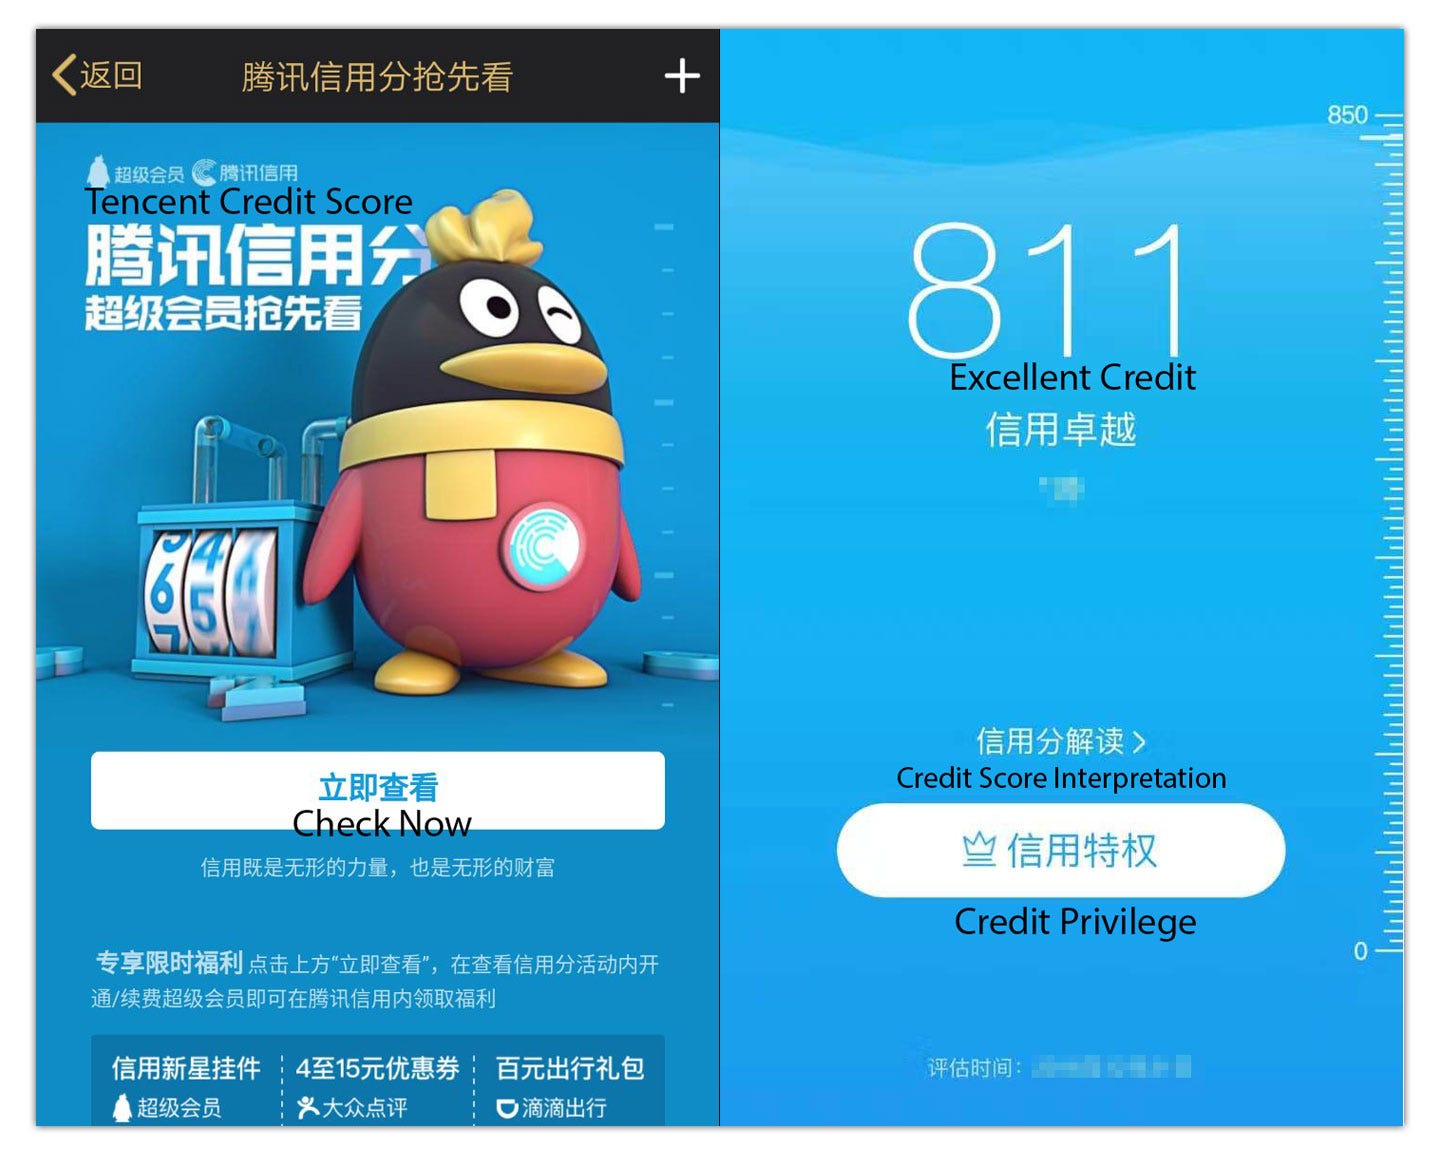 Tencent Credit Score Launching Soon On WeChat & QQ | SME Finance Forum